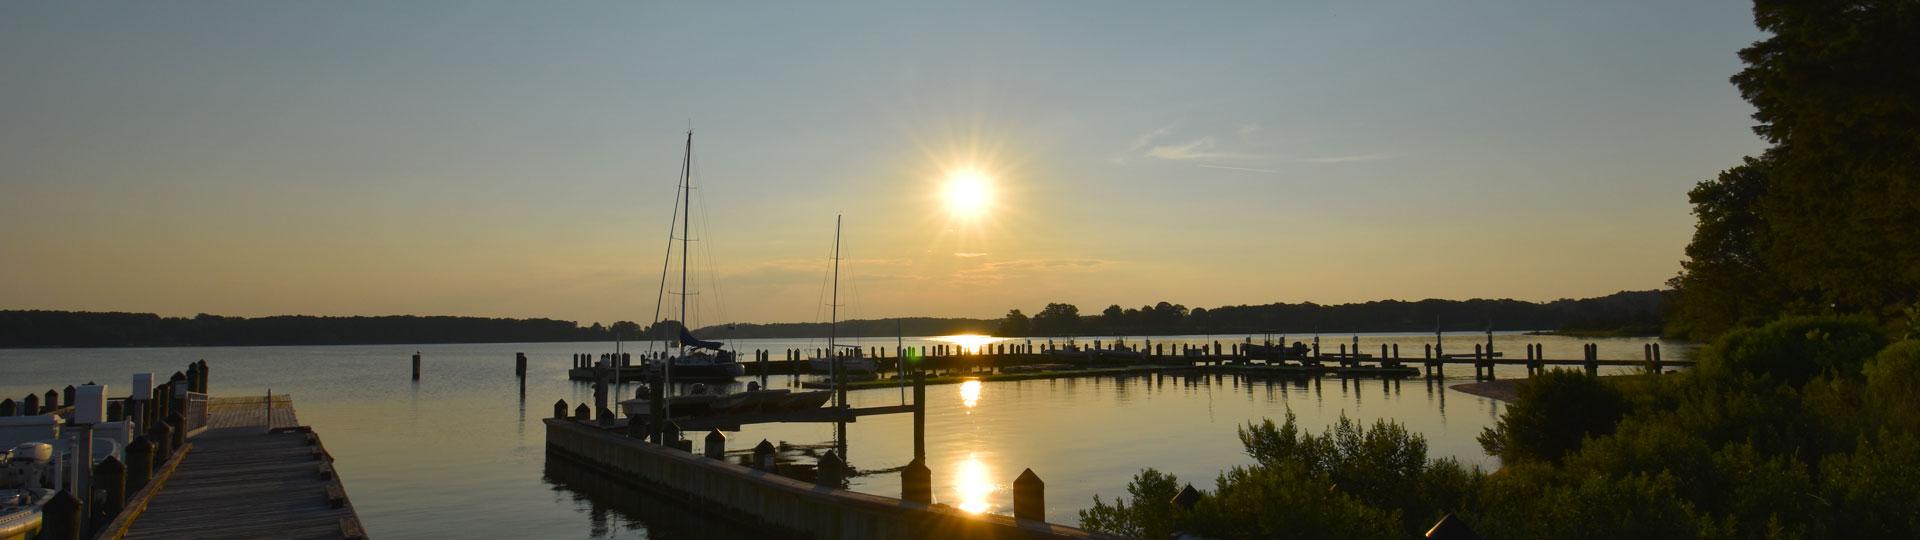 SMCM riverfront at sunset